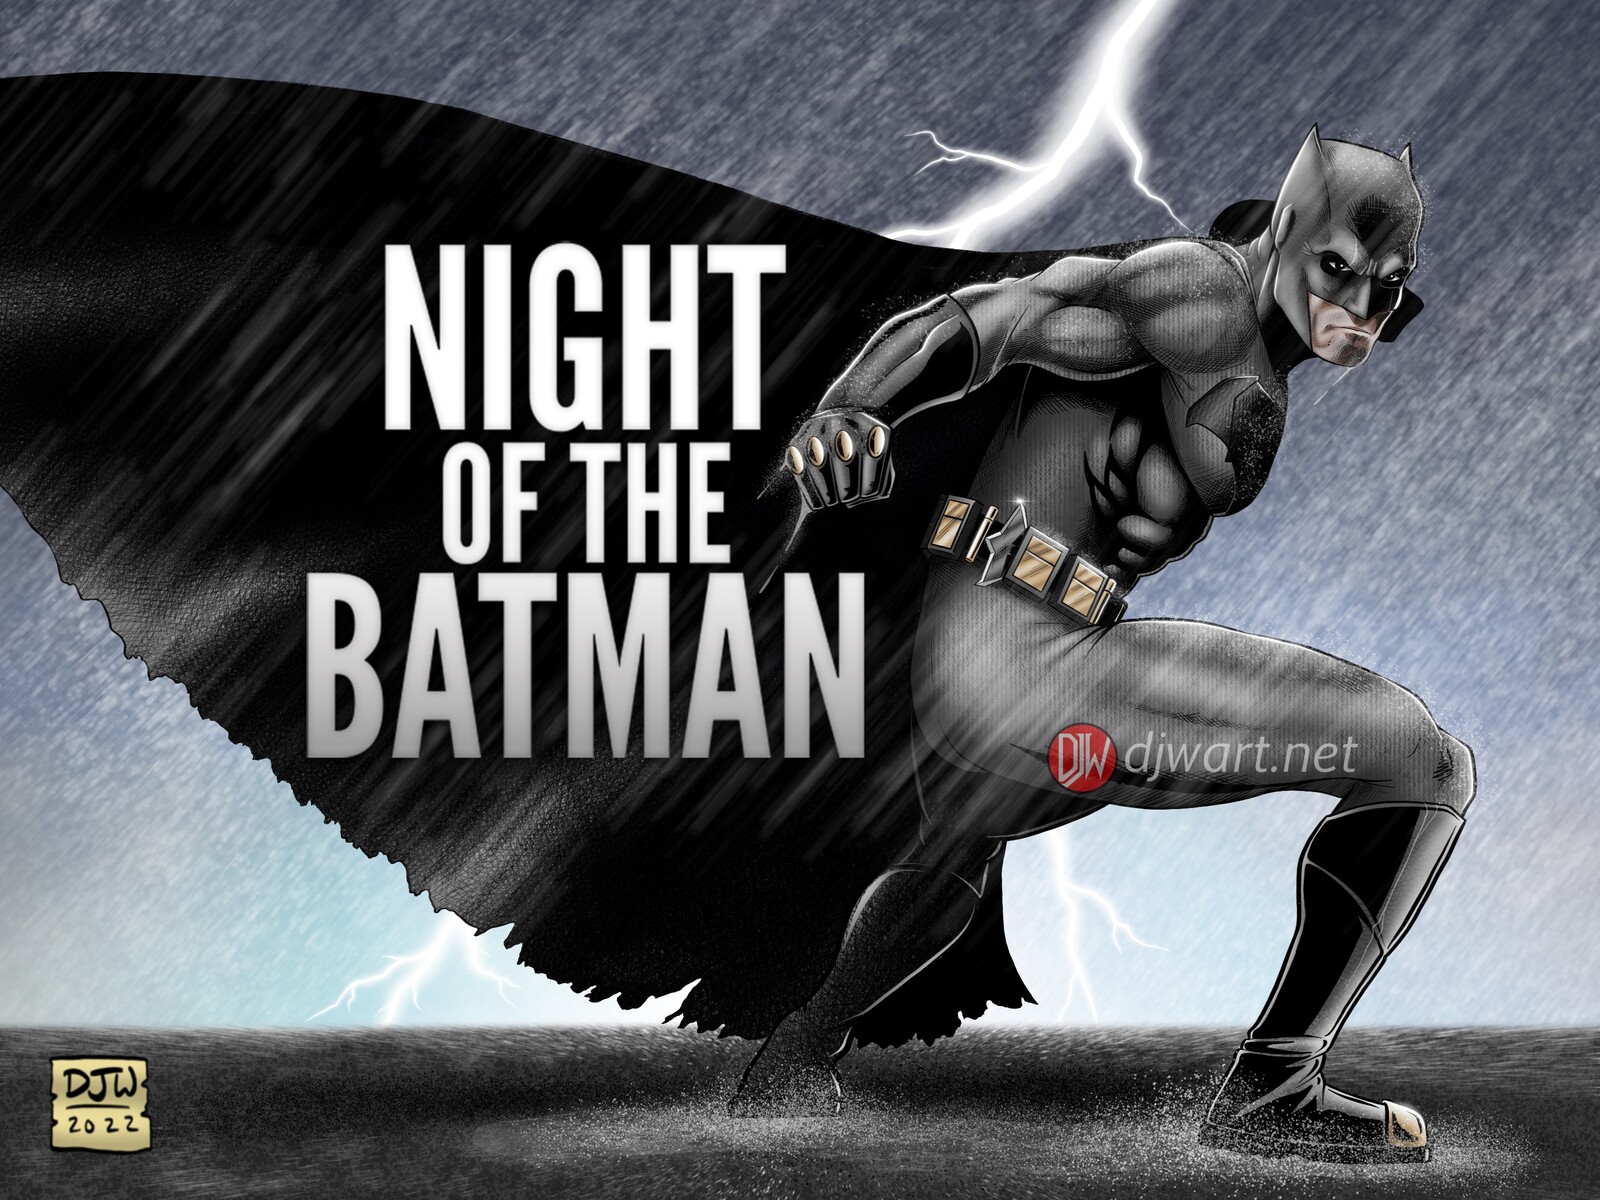 “Night of The Batman” Concept Piece